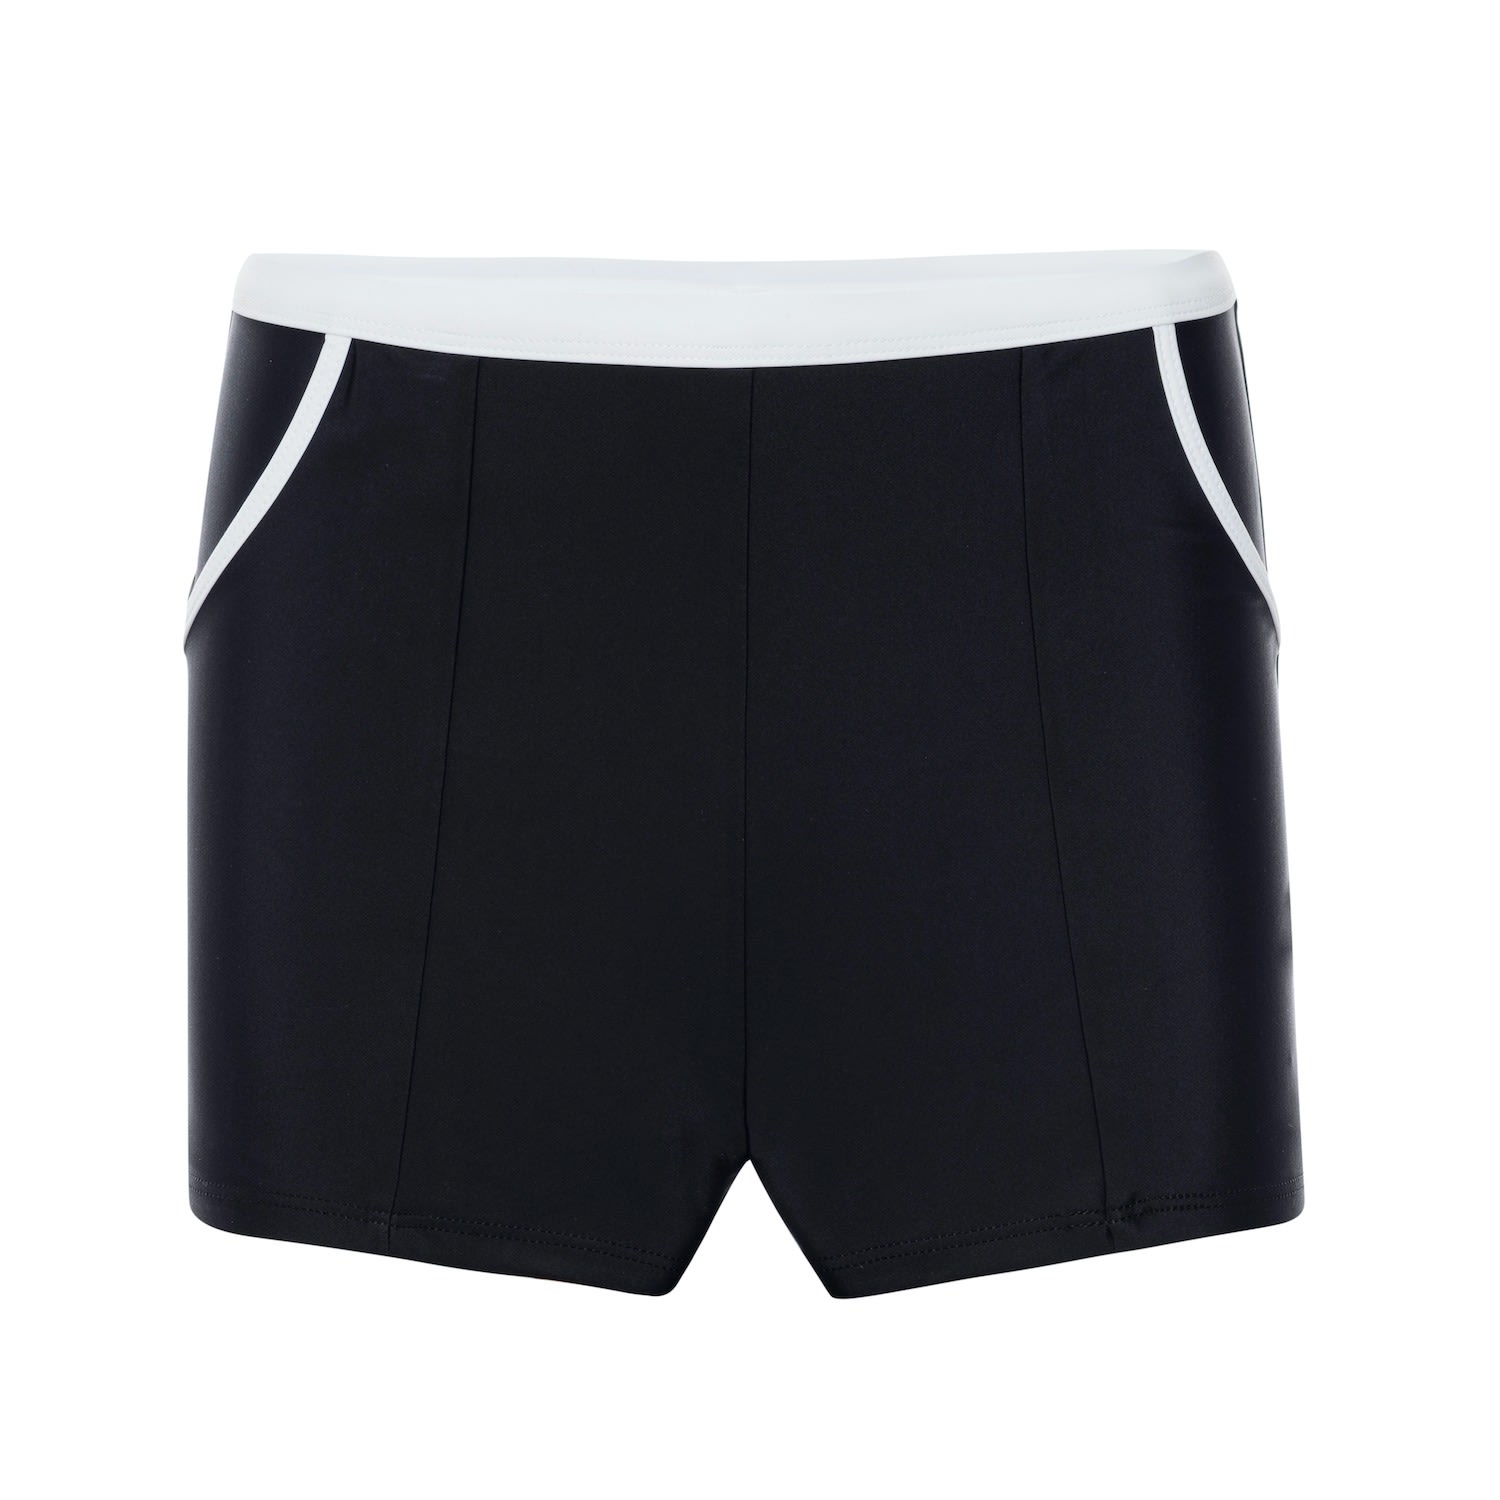 Women's Black / White Ally Boy Short With Pockets - Black, White Extra Small MIGA Swimwear